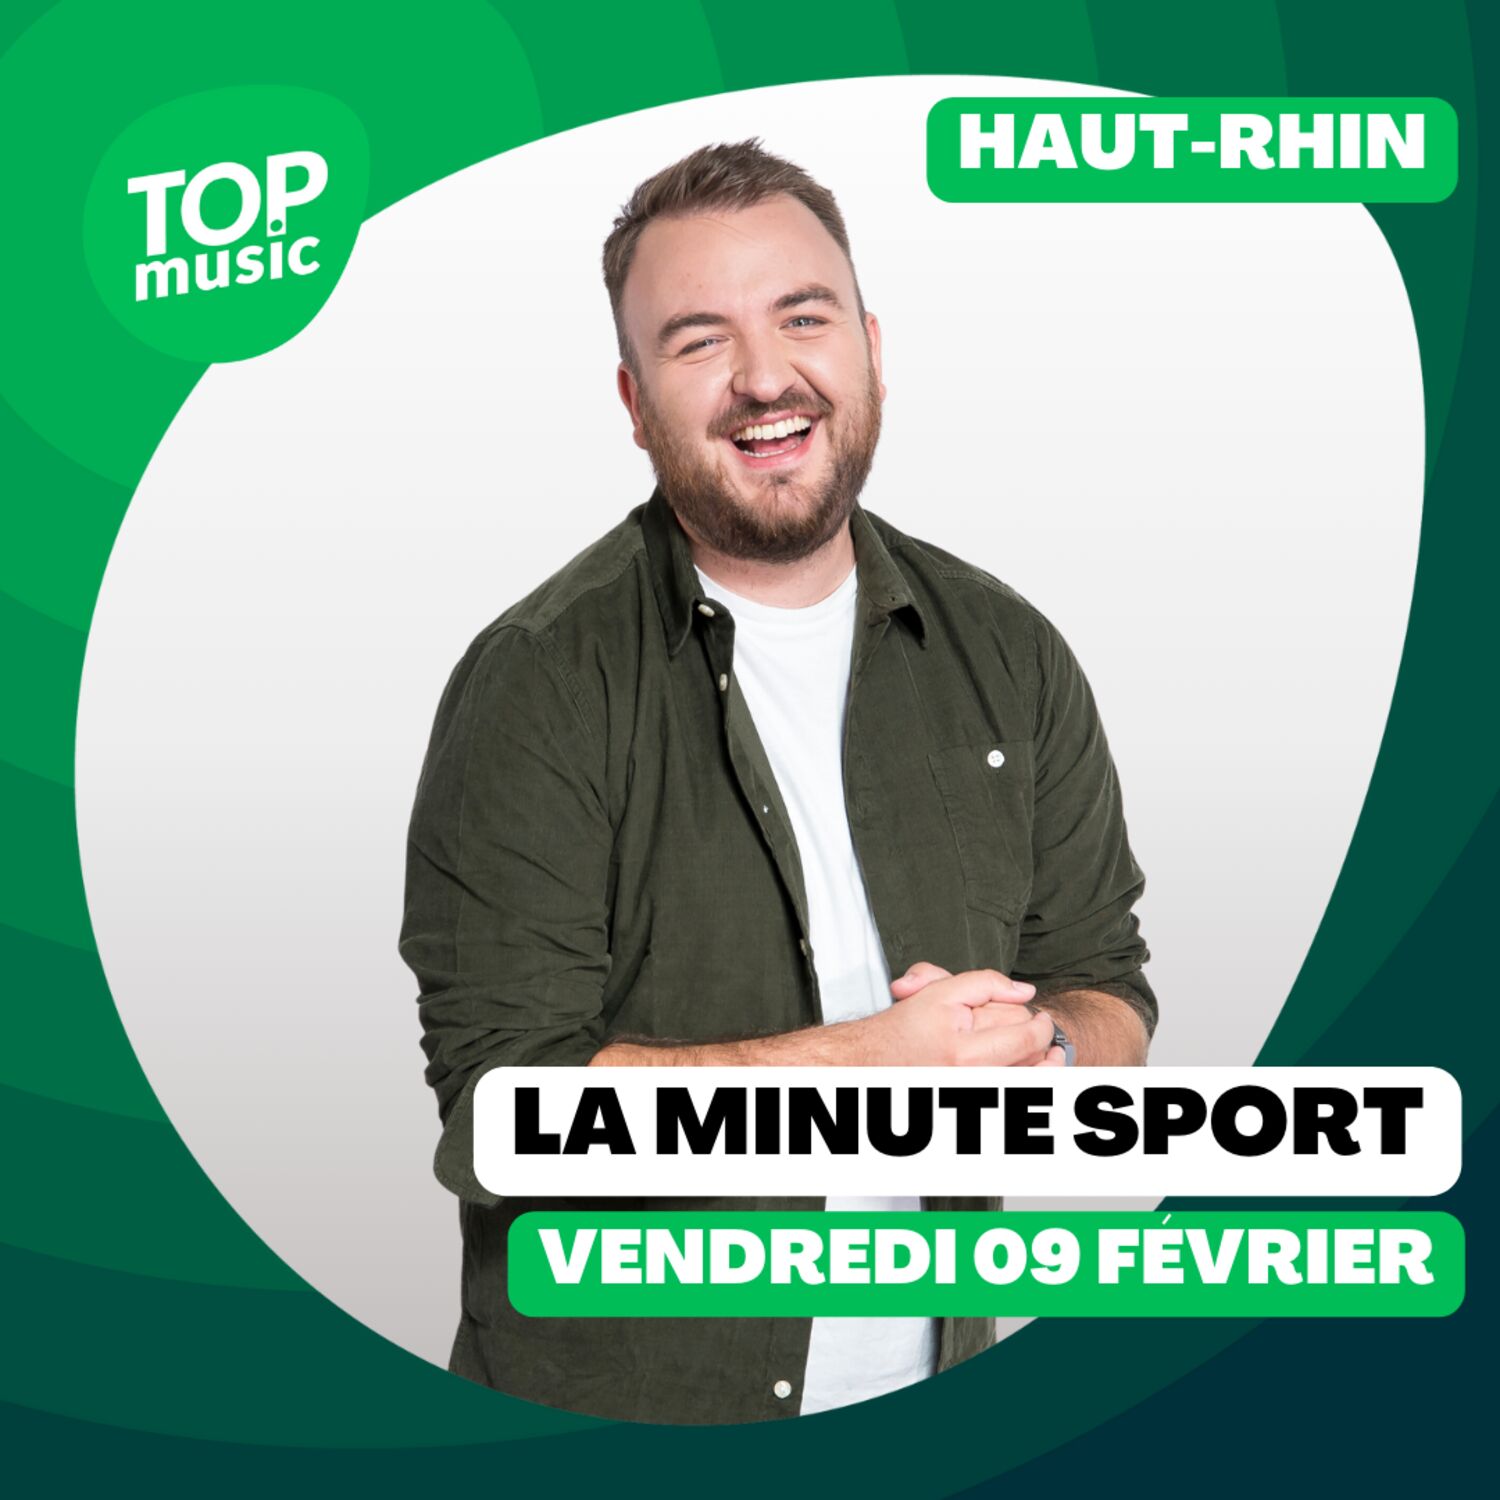 La Minute sport du Haut-Rhin - vendredi 09 février